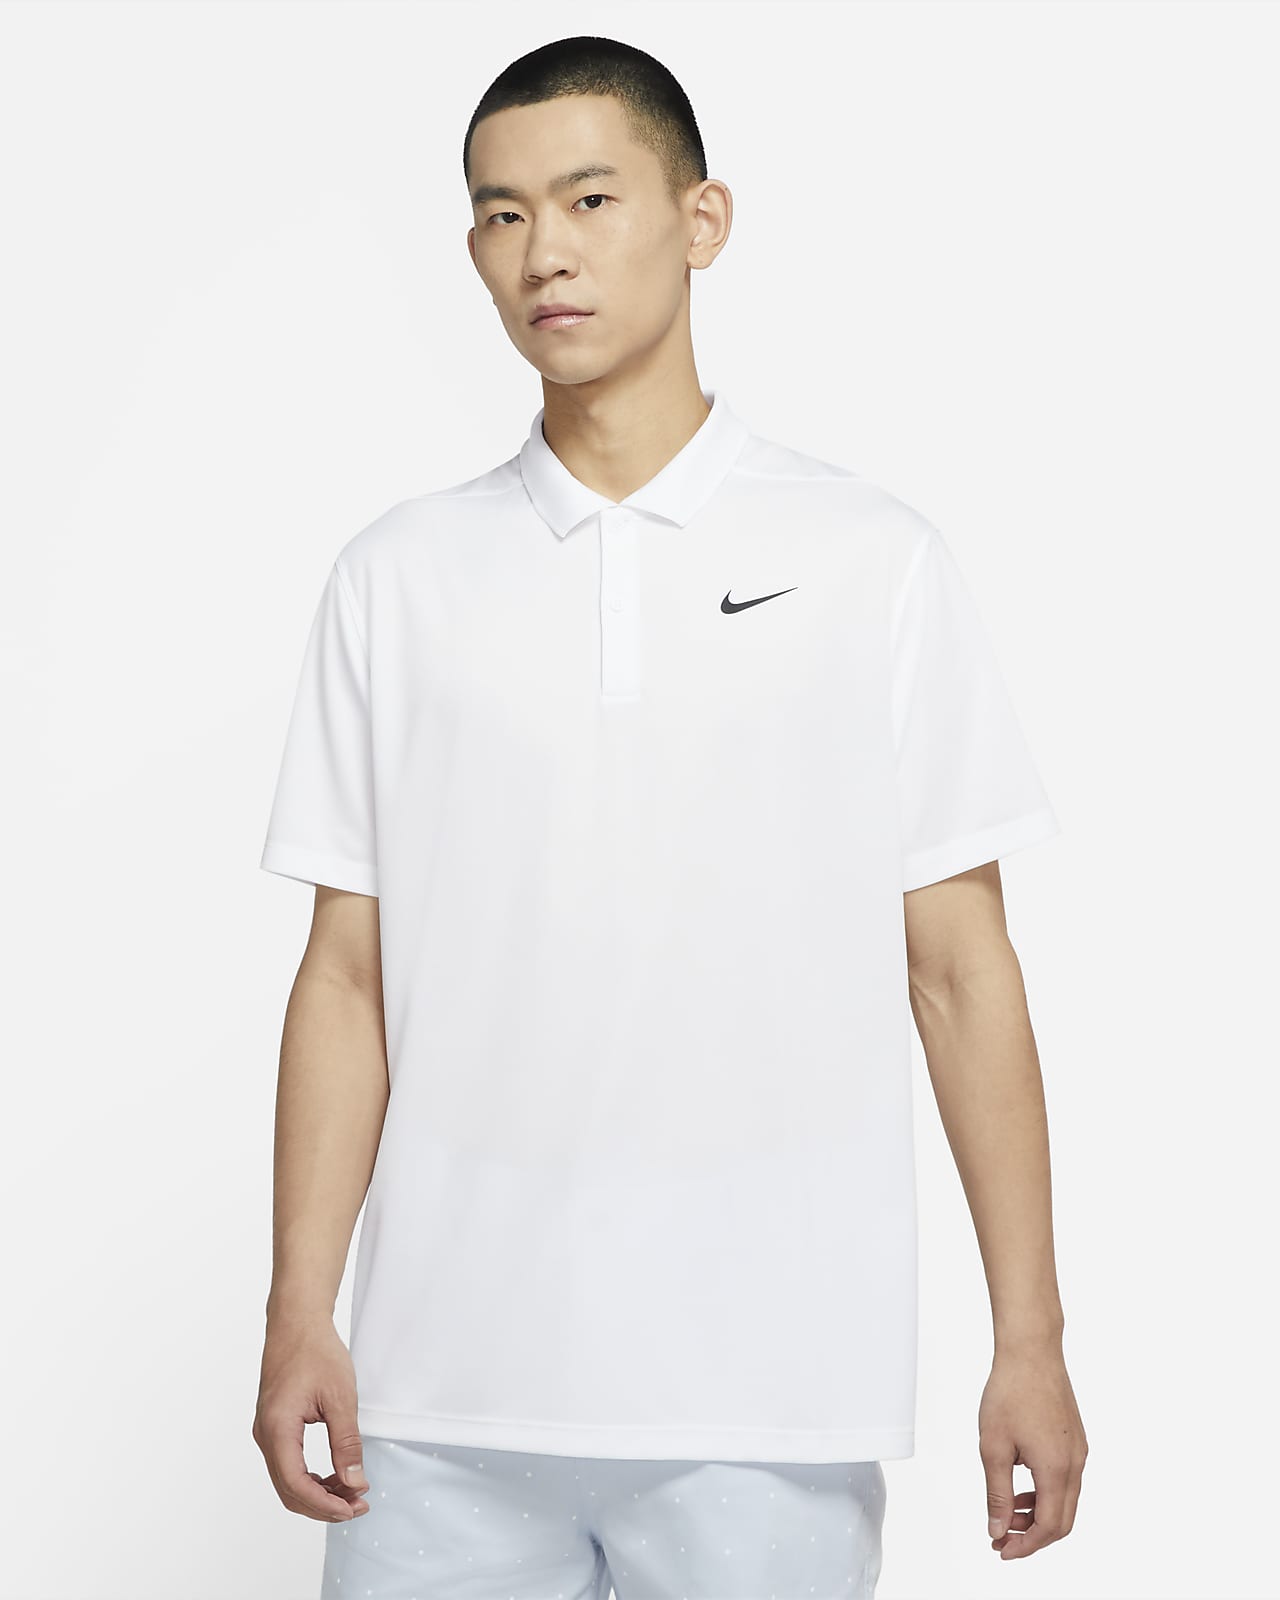 Nike Men's Golf Polo. ID